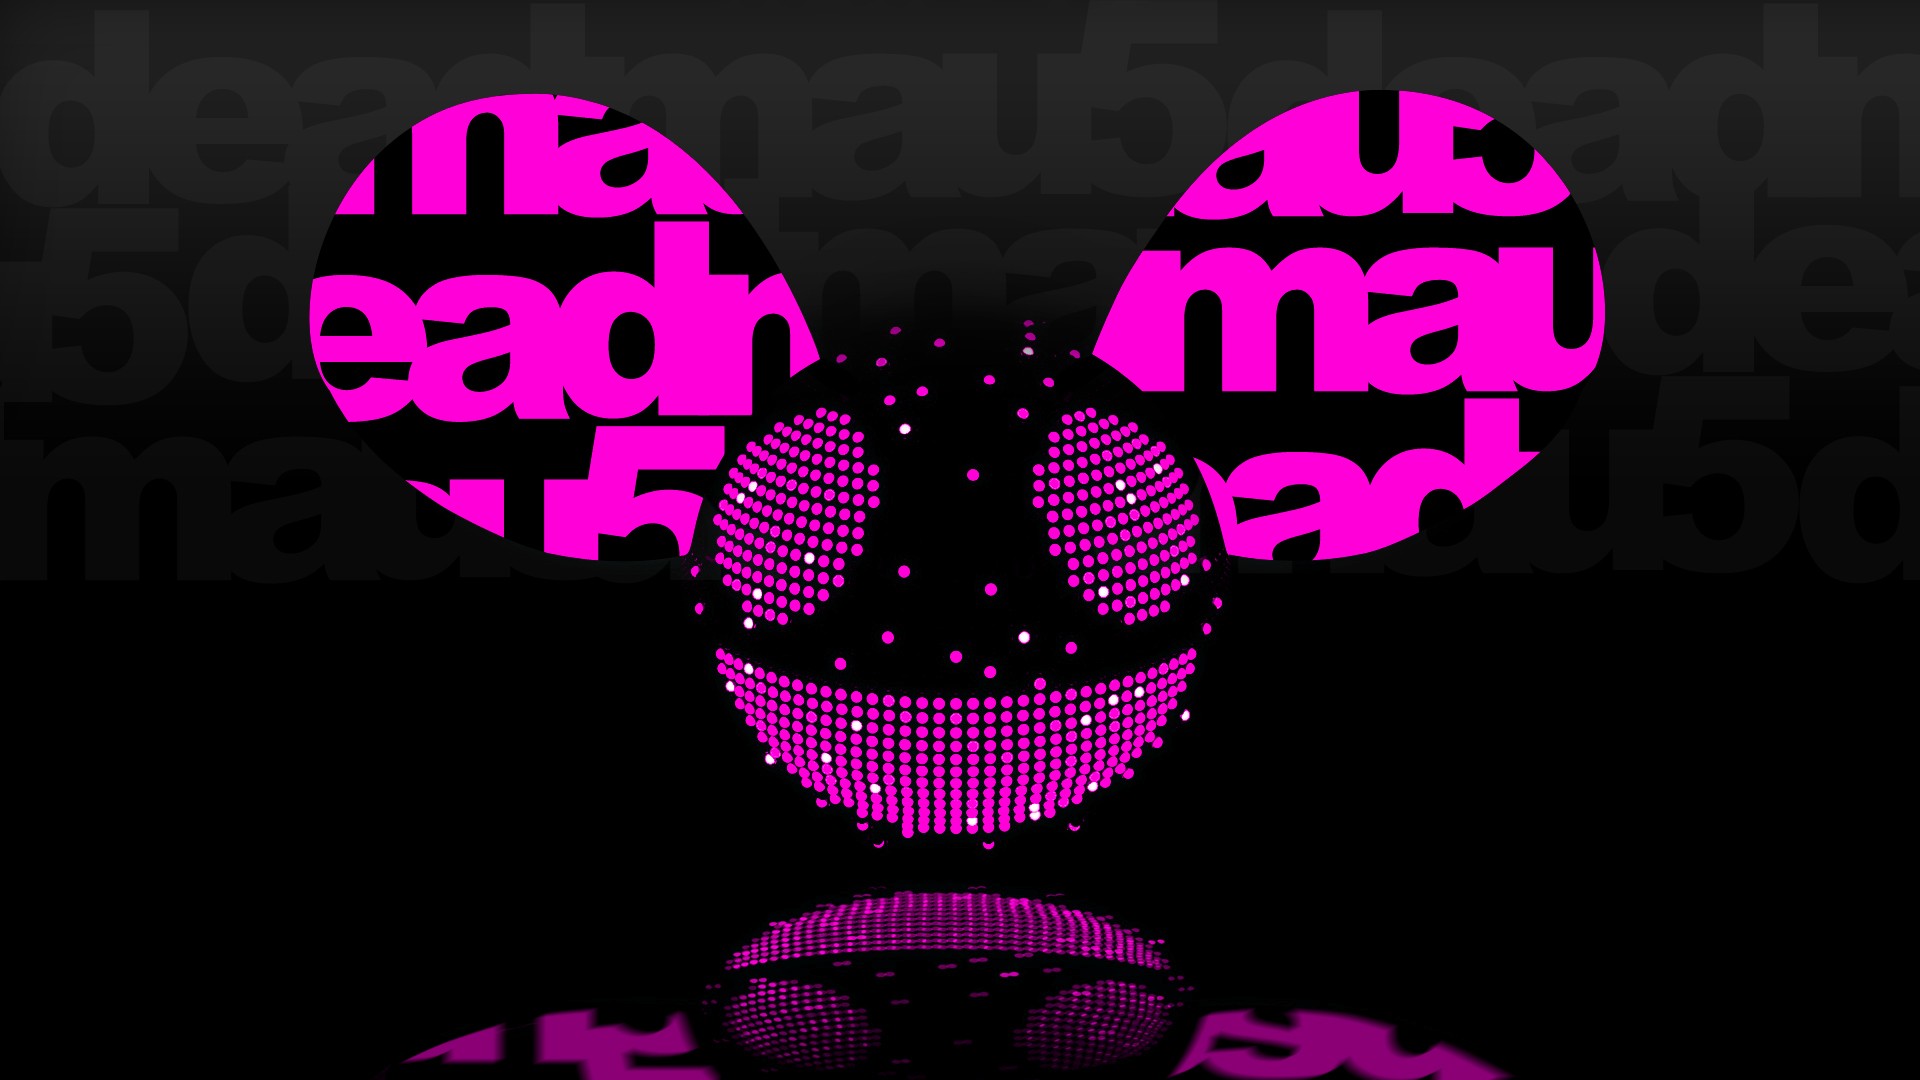 General 1920x1080 Deadmau5 digital art purple music neon reflection simple background electronic music